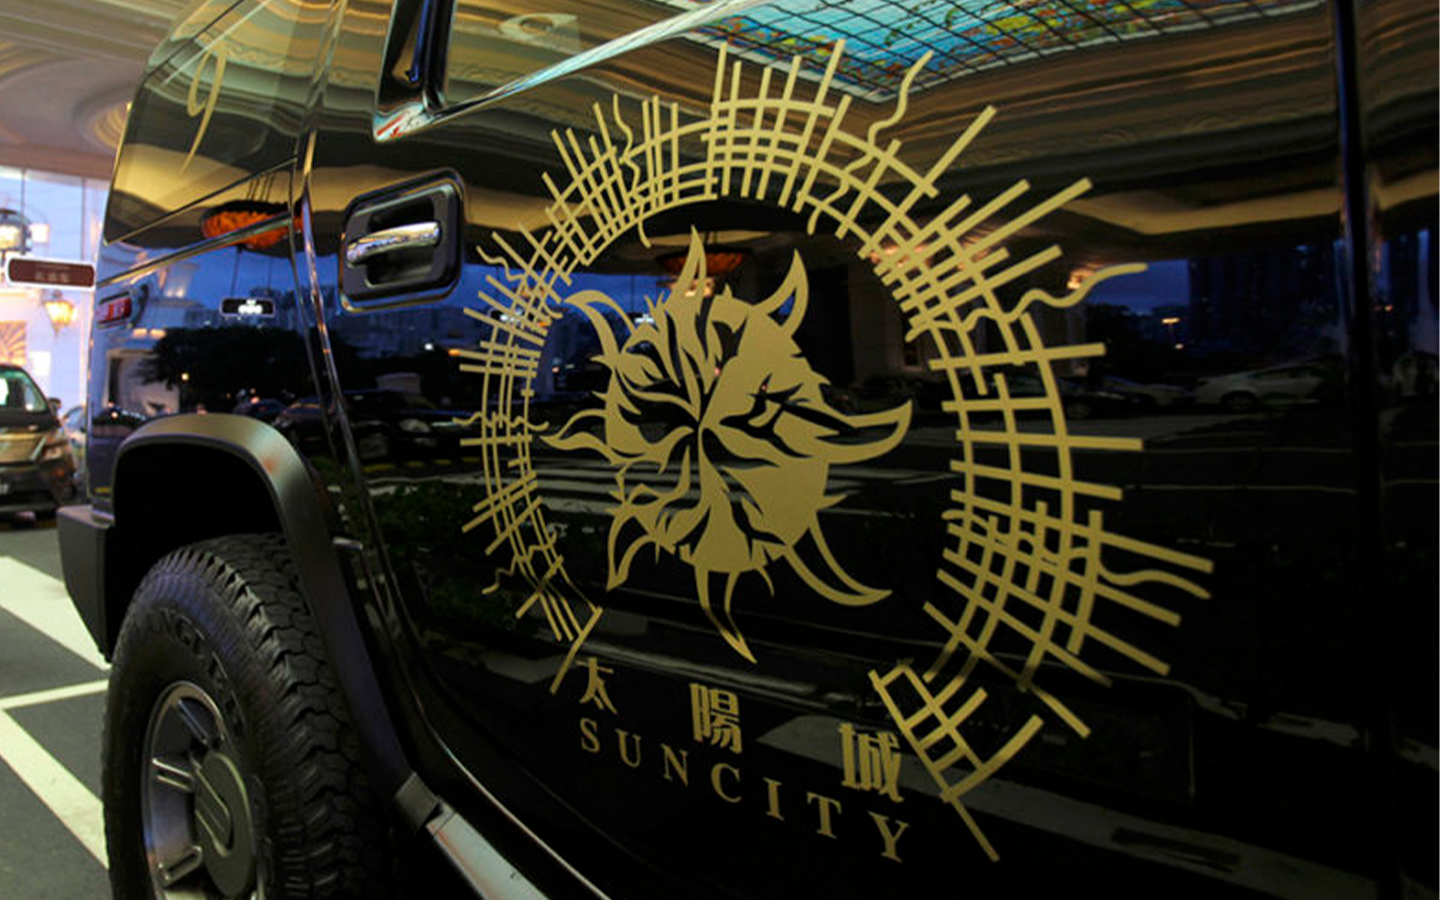 Suncity Group limousine